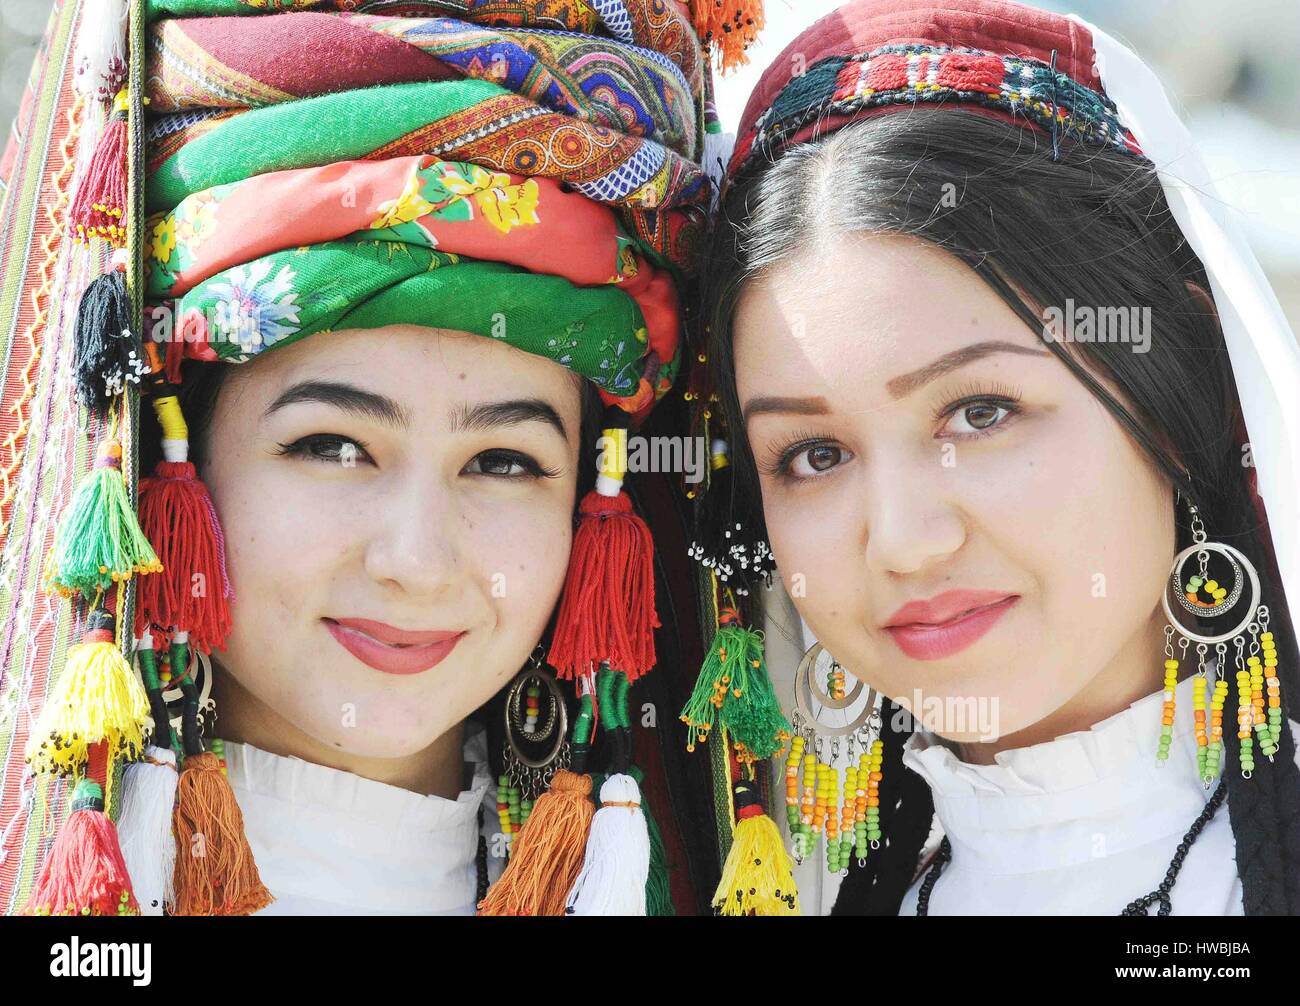 Узбечки ташкента. Узбекские женщины. Узбекистан народ. Узбекистан люди внешность. Узбечки и таджички.